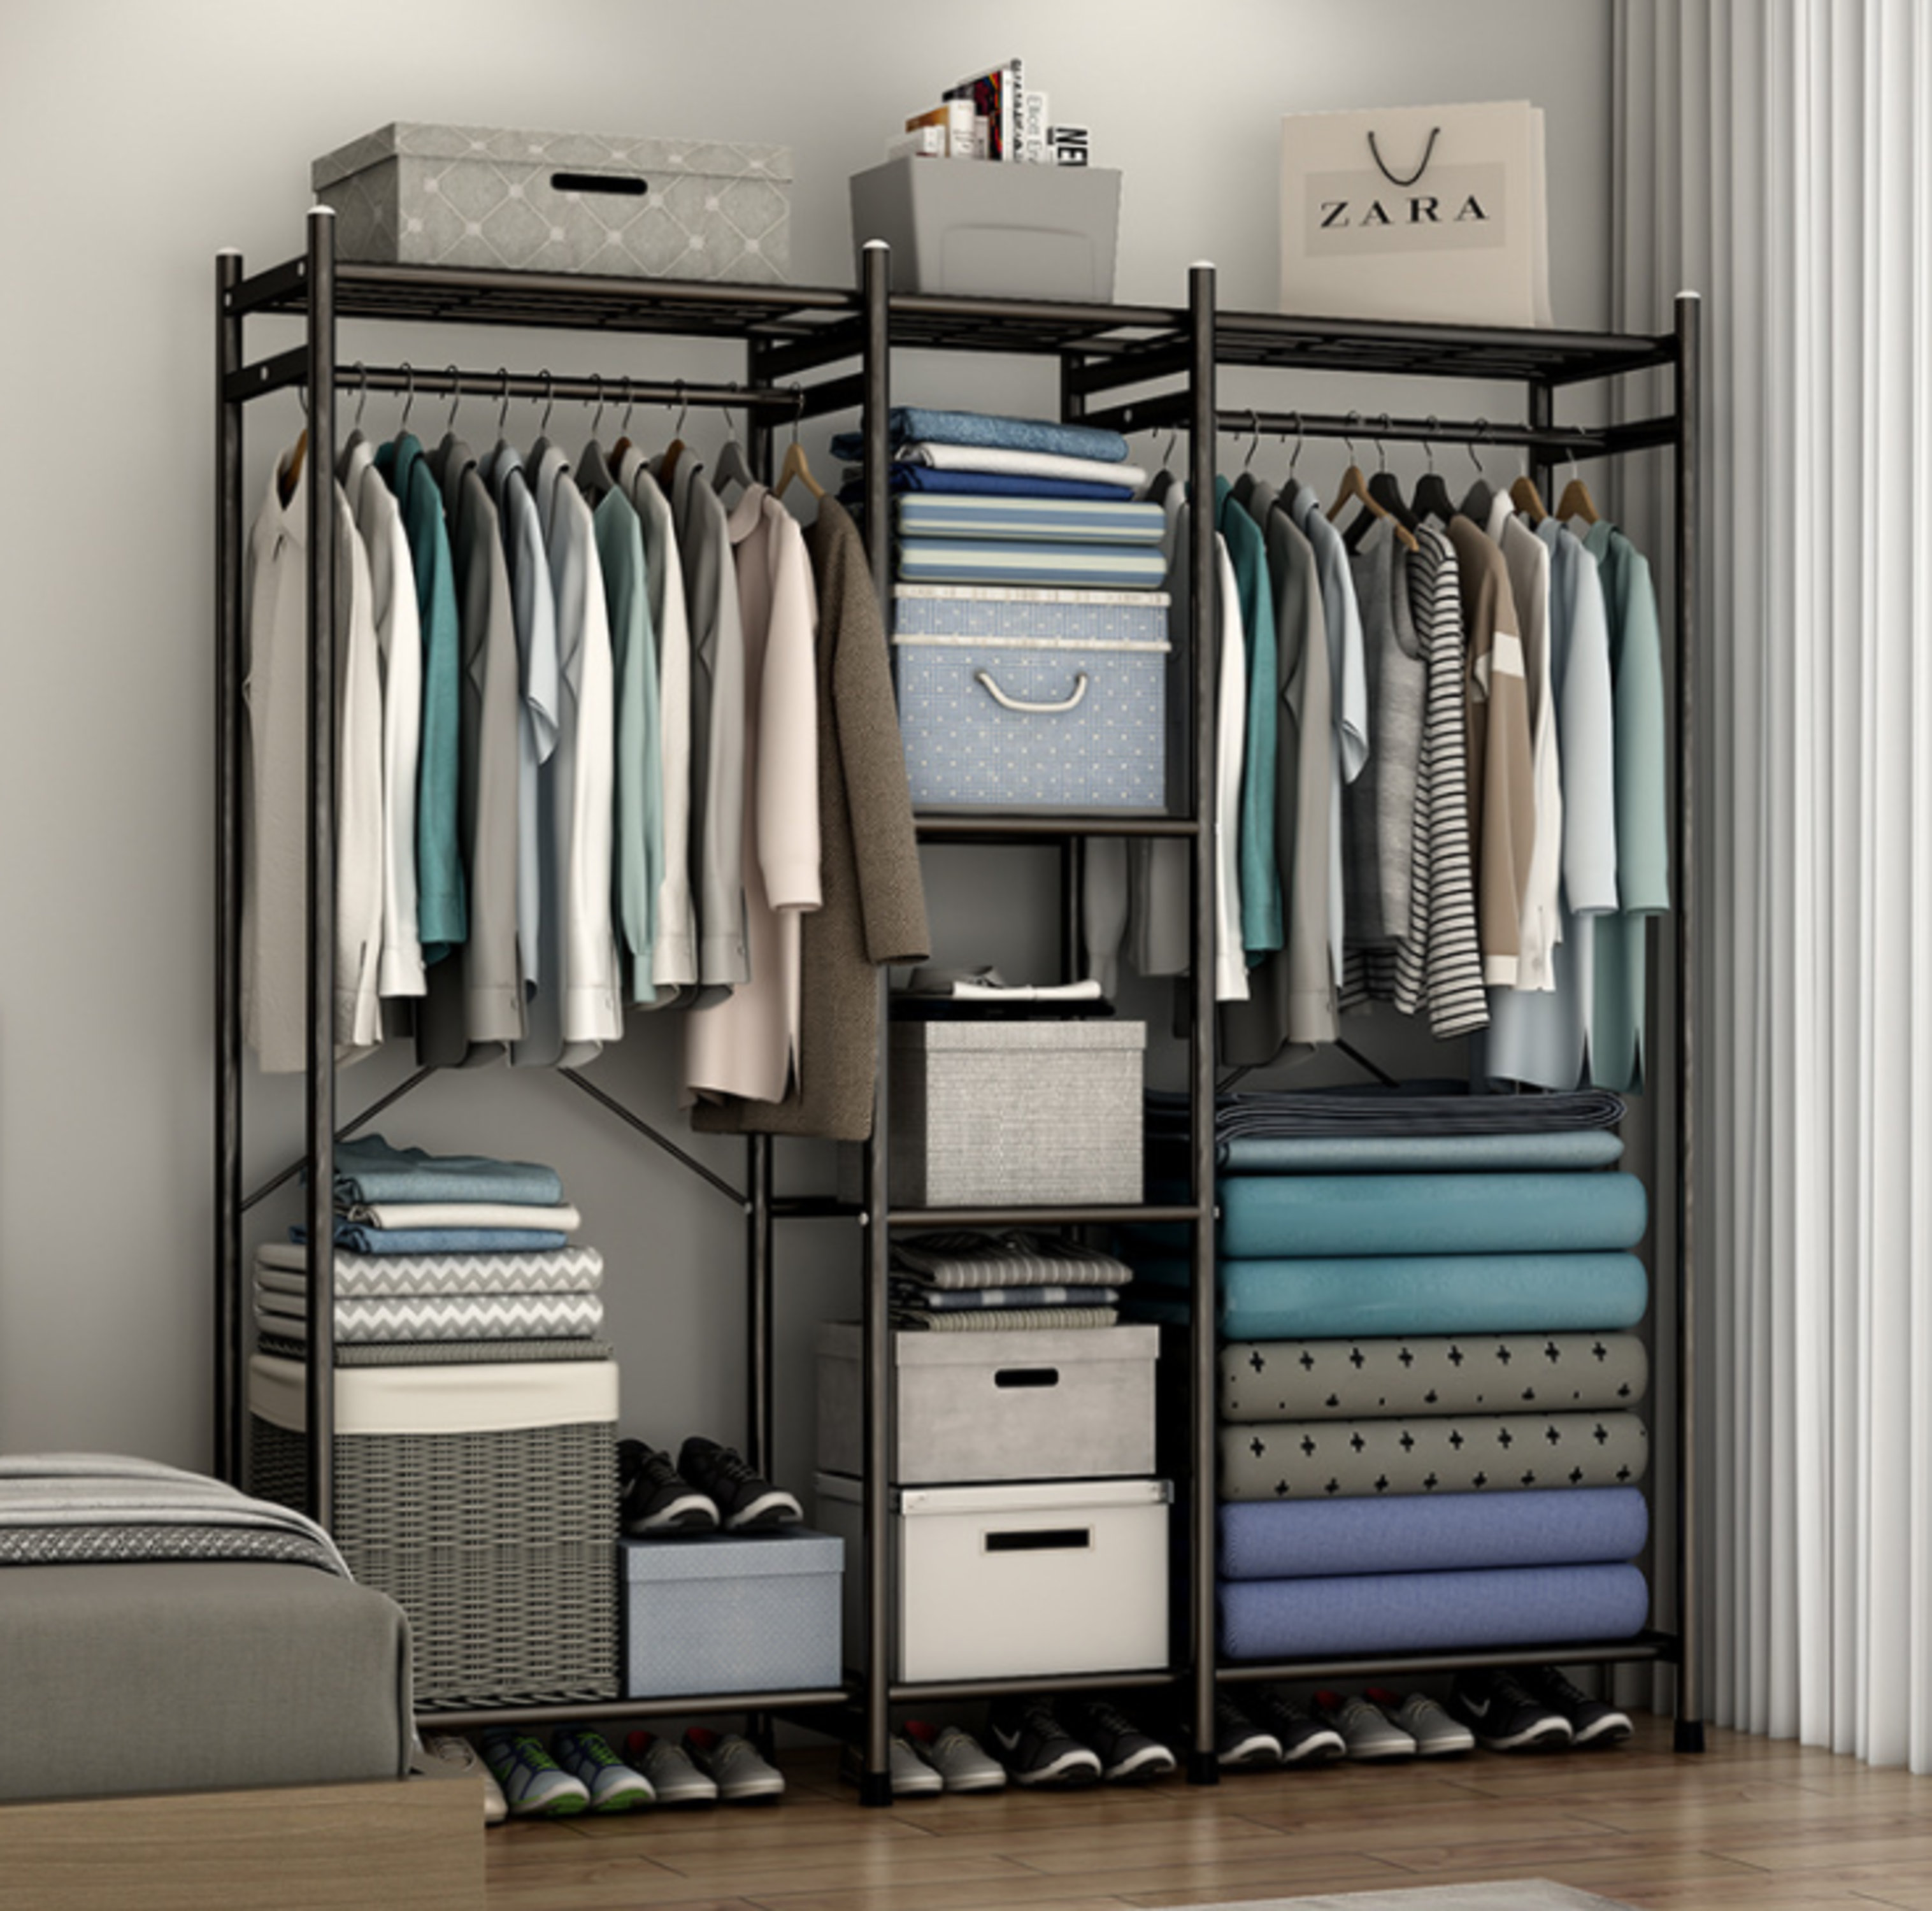 How To Organize A Spare Closet - Organized-ish